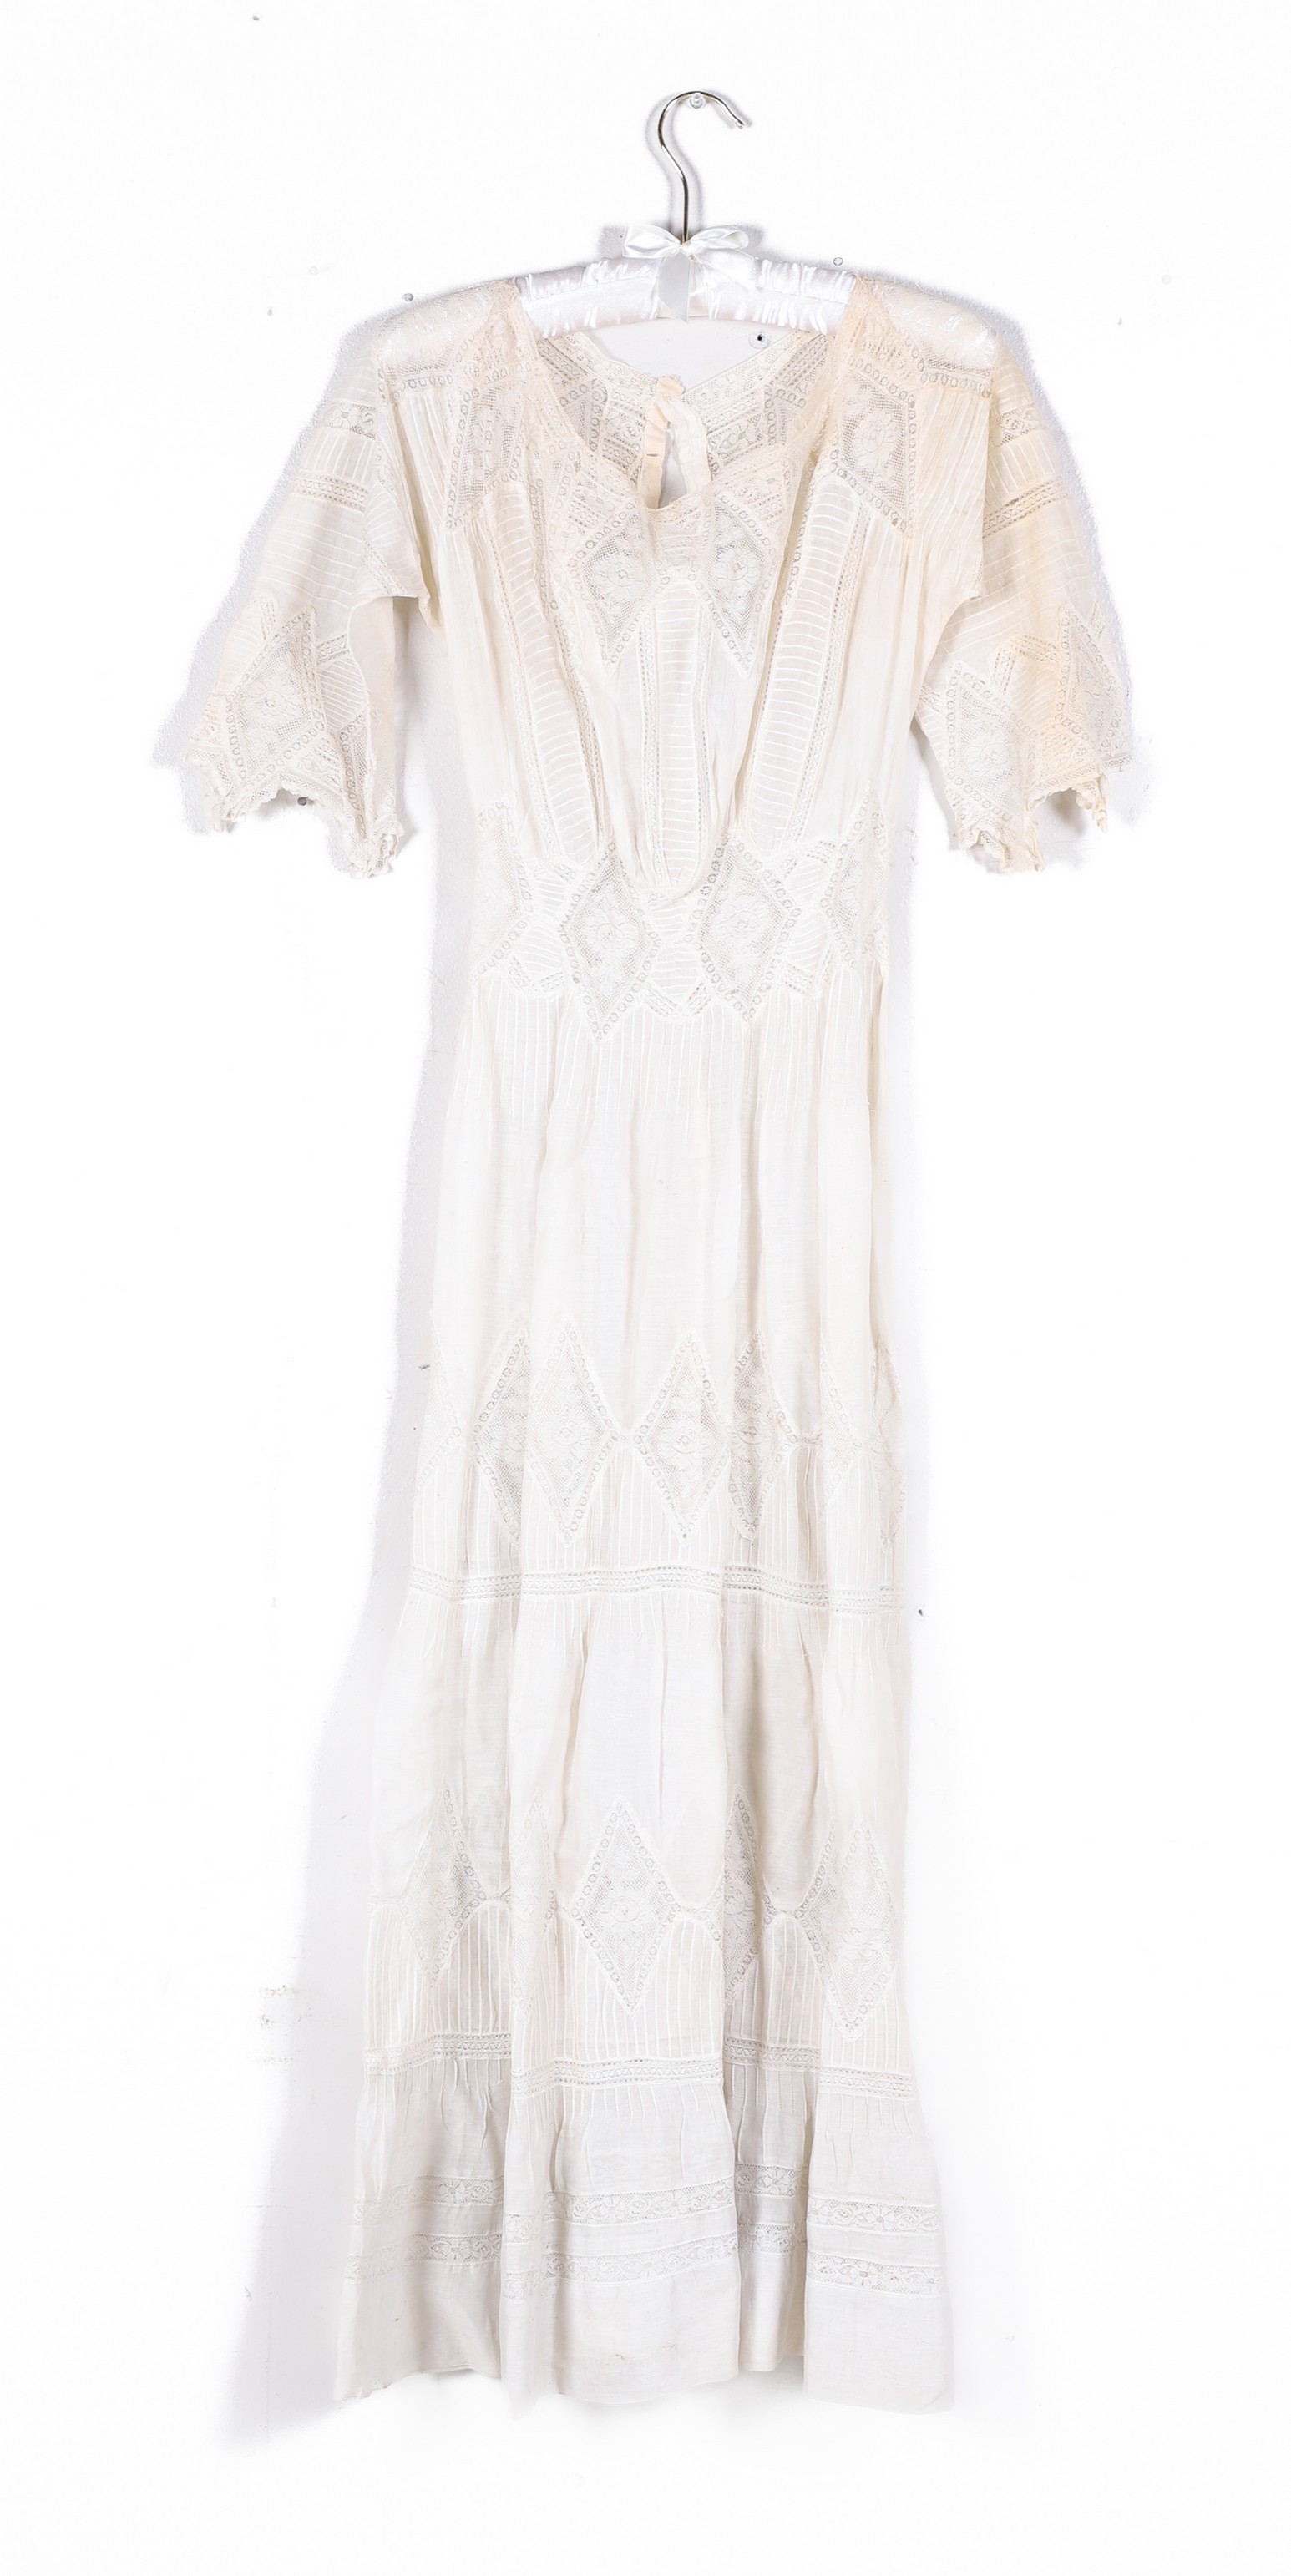 1900 Lace openwork dress, heavily lace